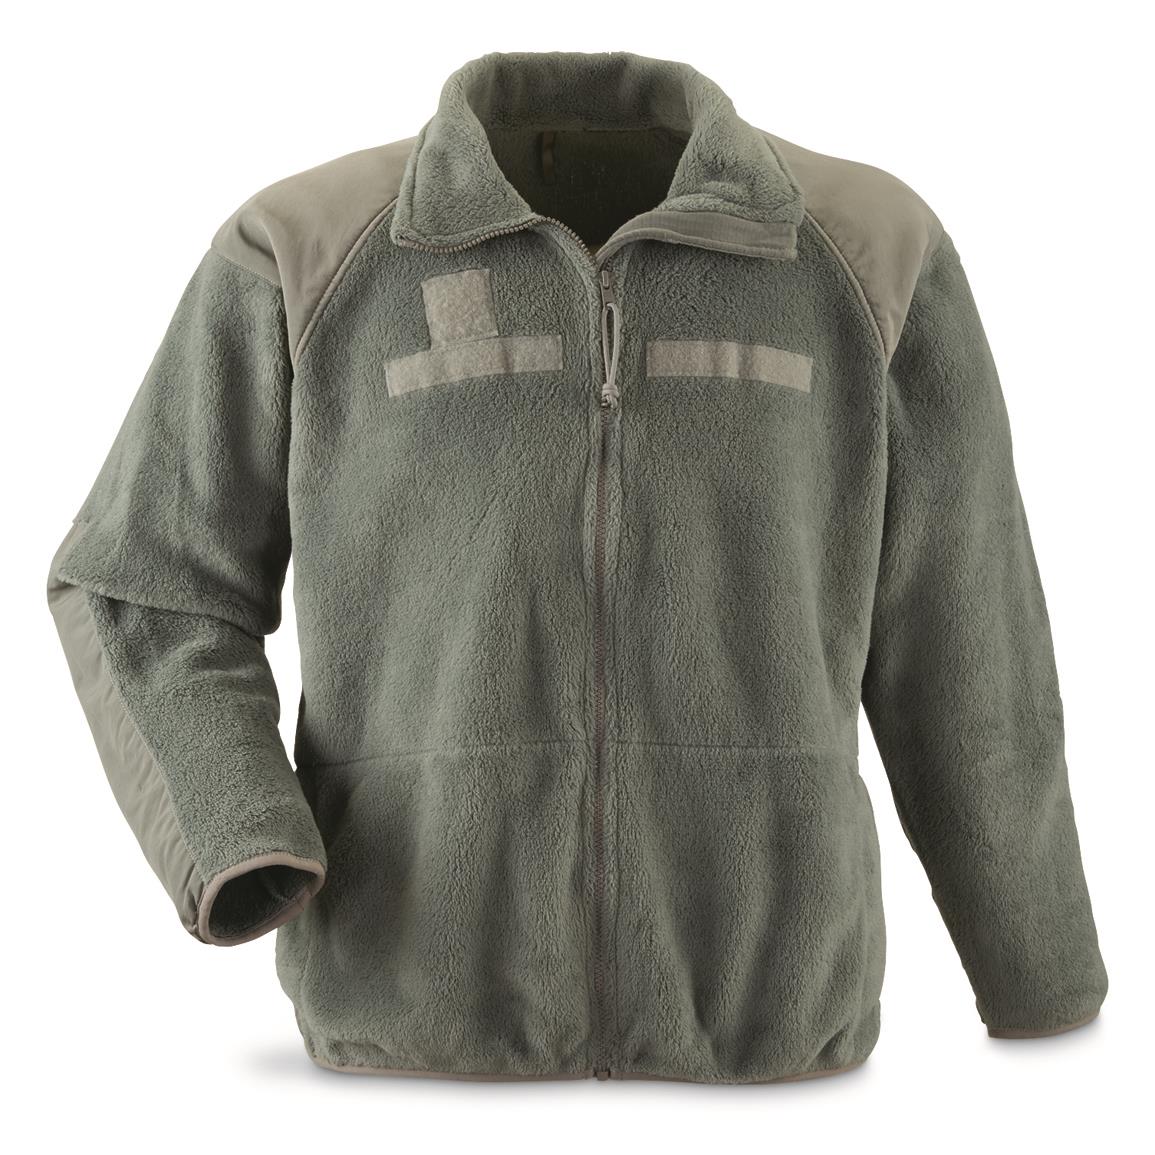 U.s. Army Fleece Jacket